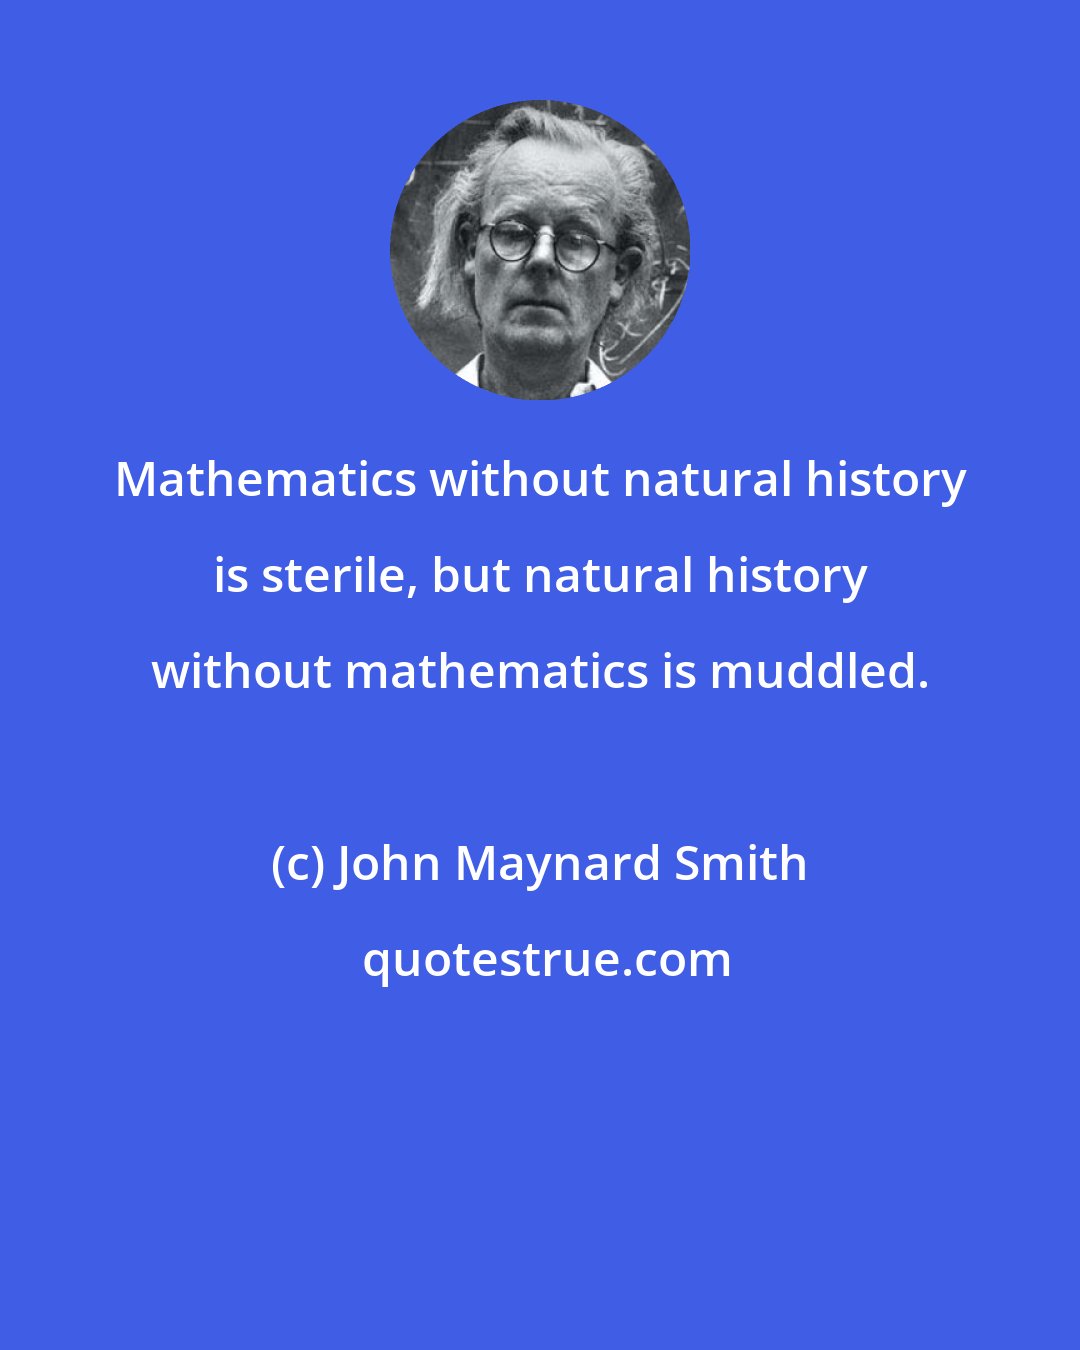 John Maynard Smith: Mathematics without natural history is sterile, but natural history without mathematics is muddled.